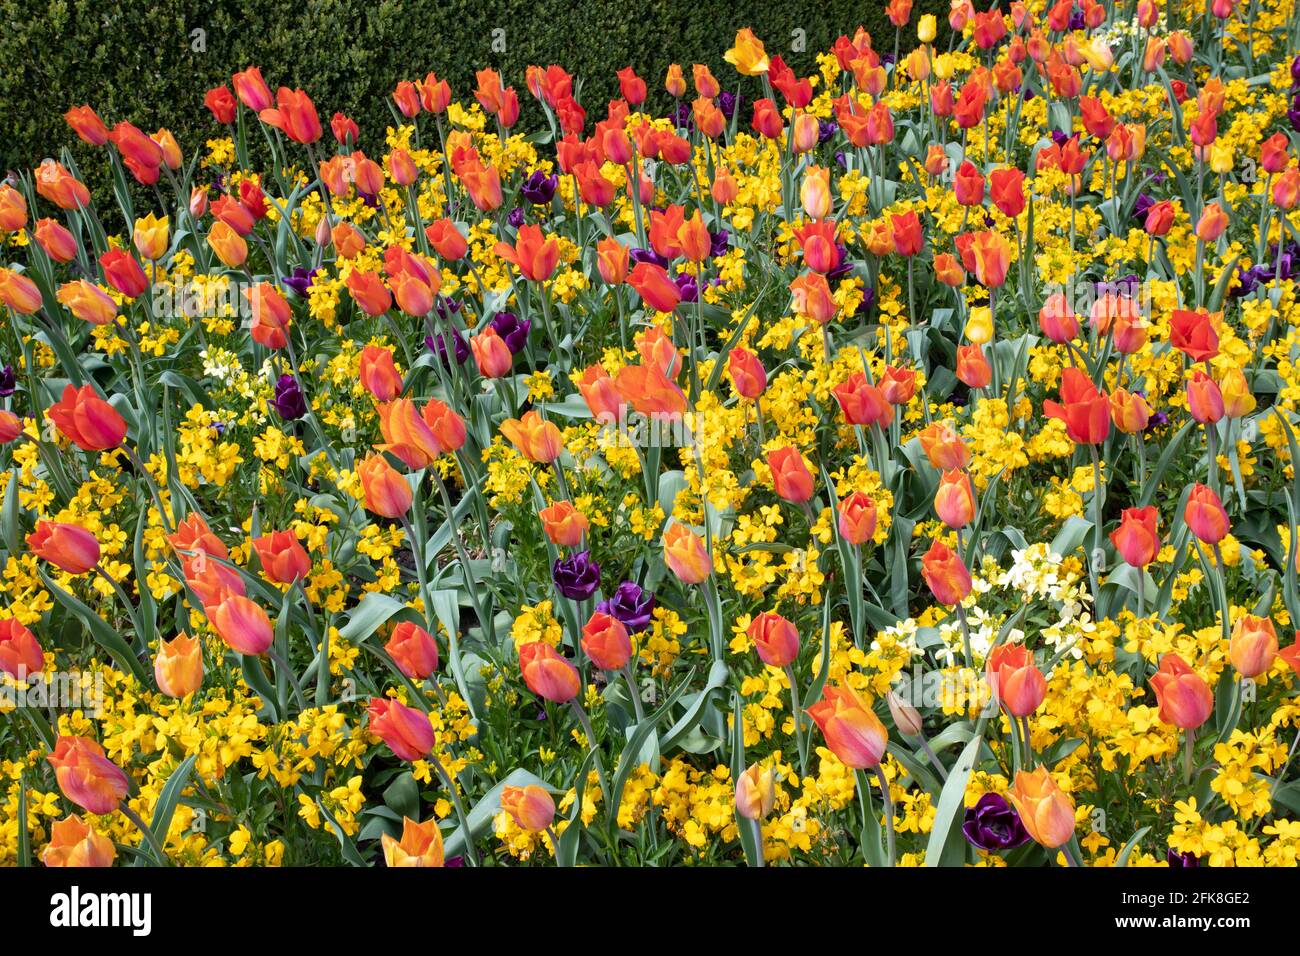 Tulips El Nino and Purple Rain with yellow wallflowers Stock Photo